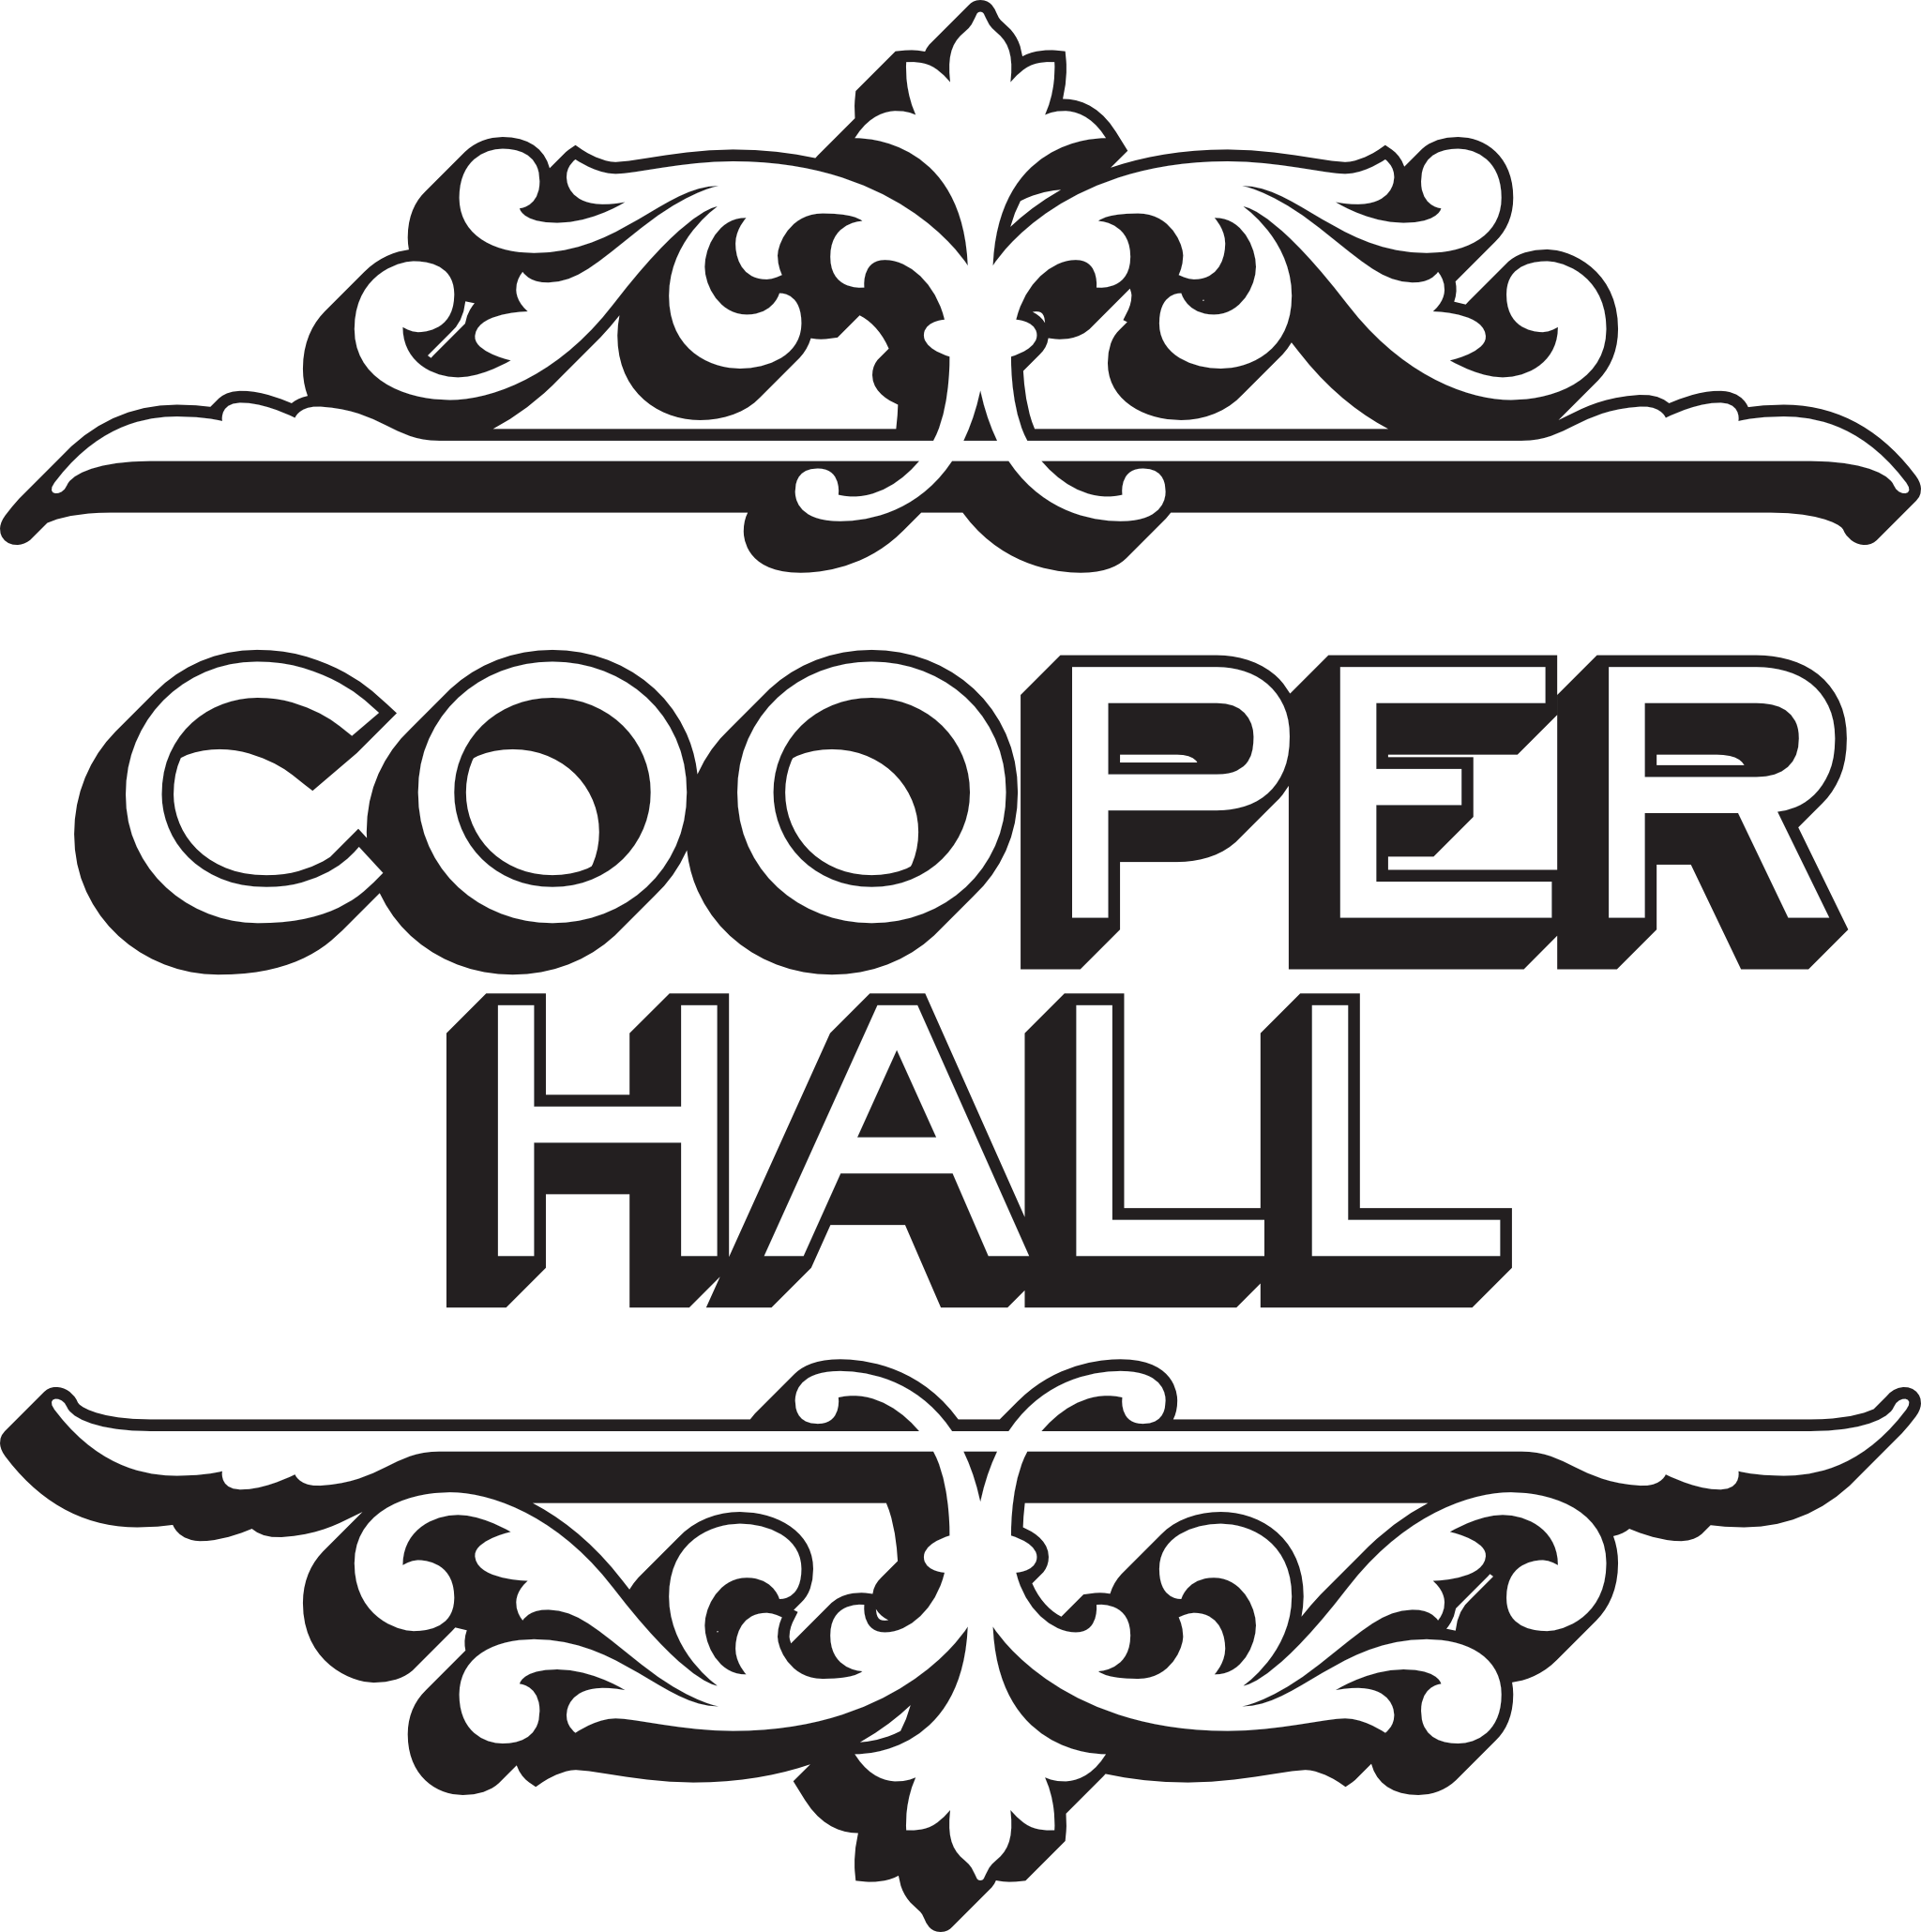 Cooper Hall